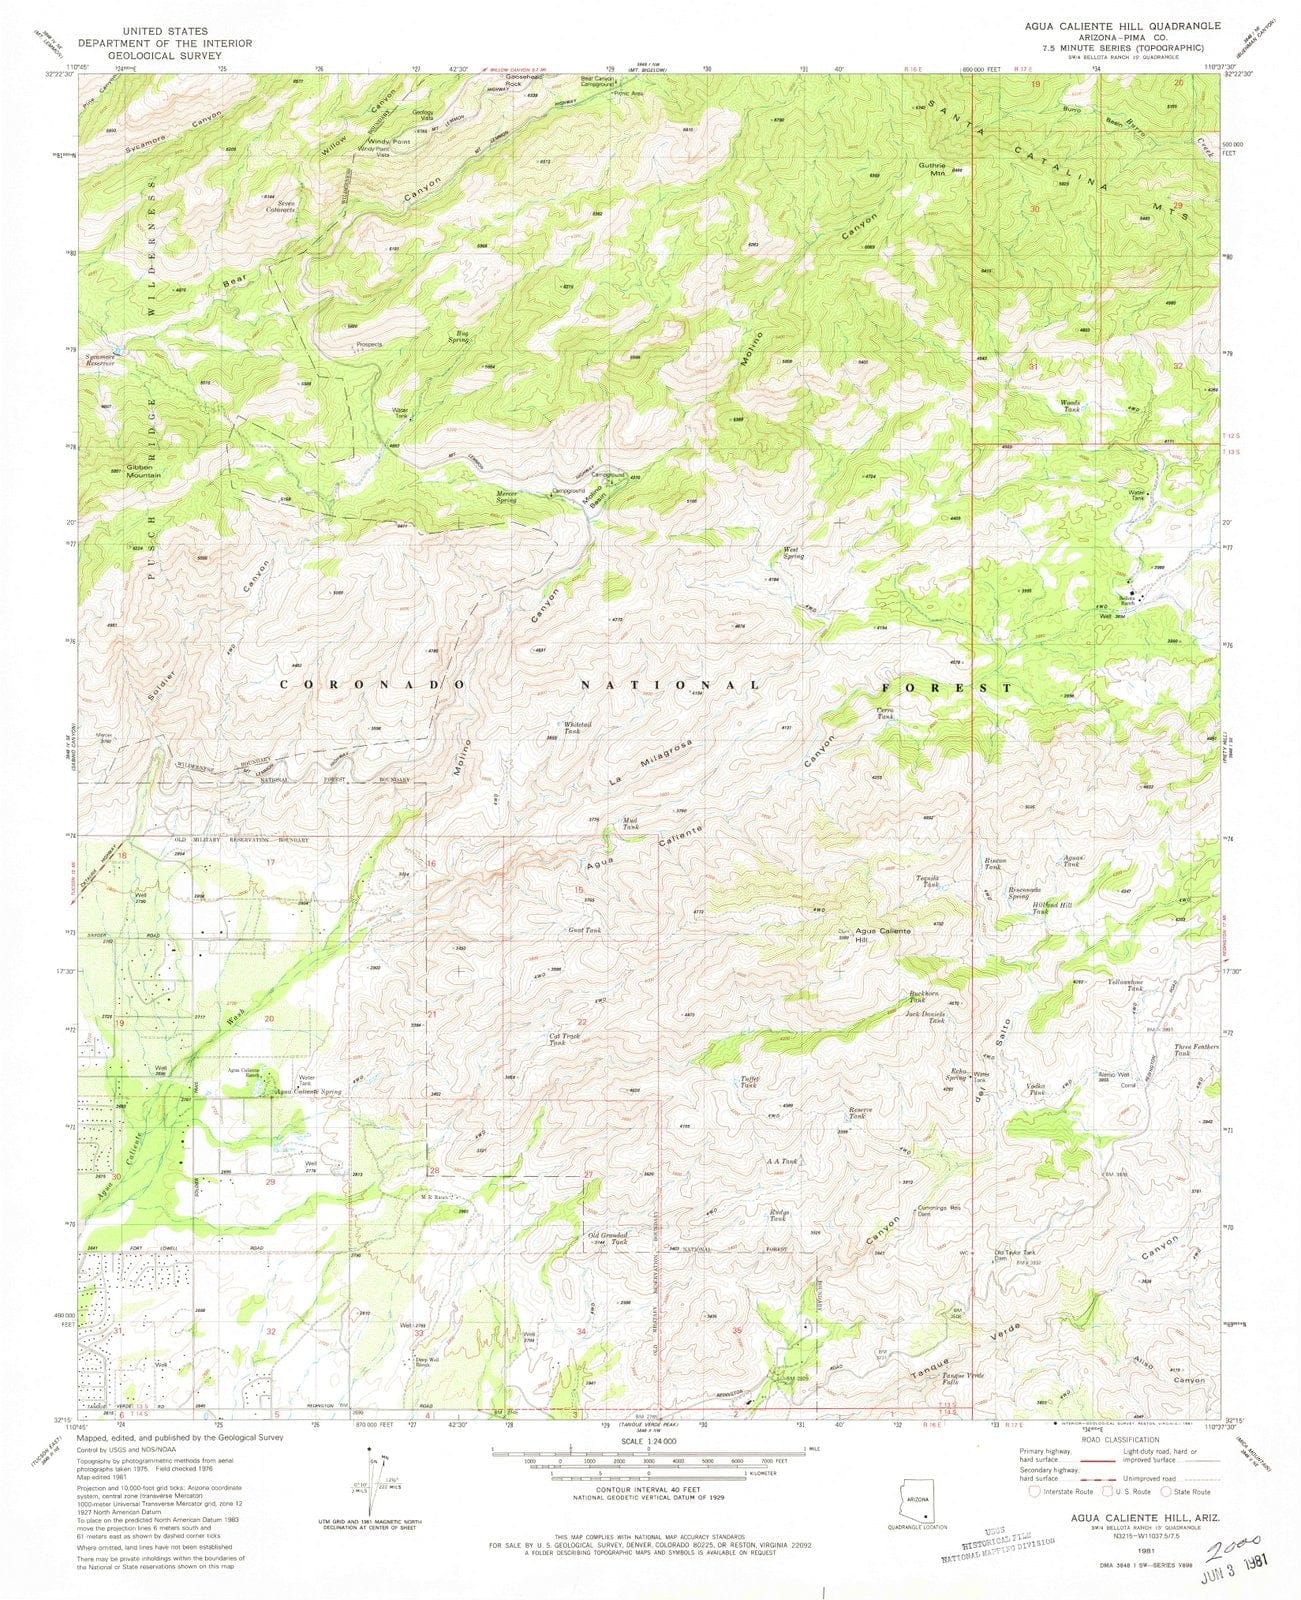 1981 Agua Caliente Hill, AZ - Arizona - USGS Topographic Map